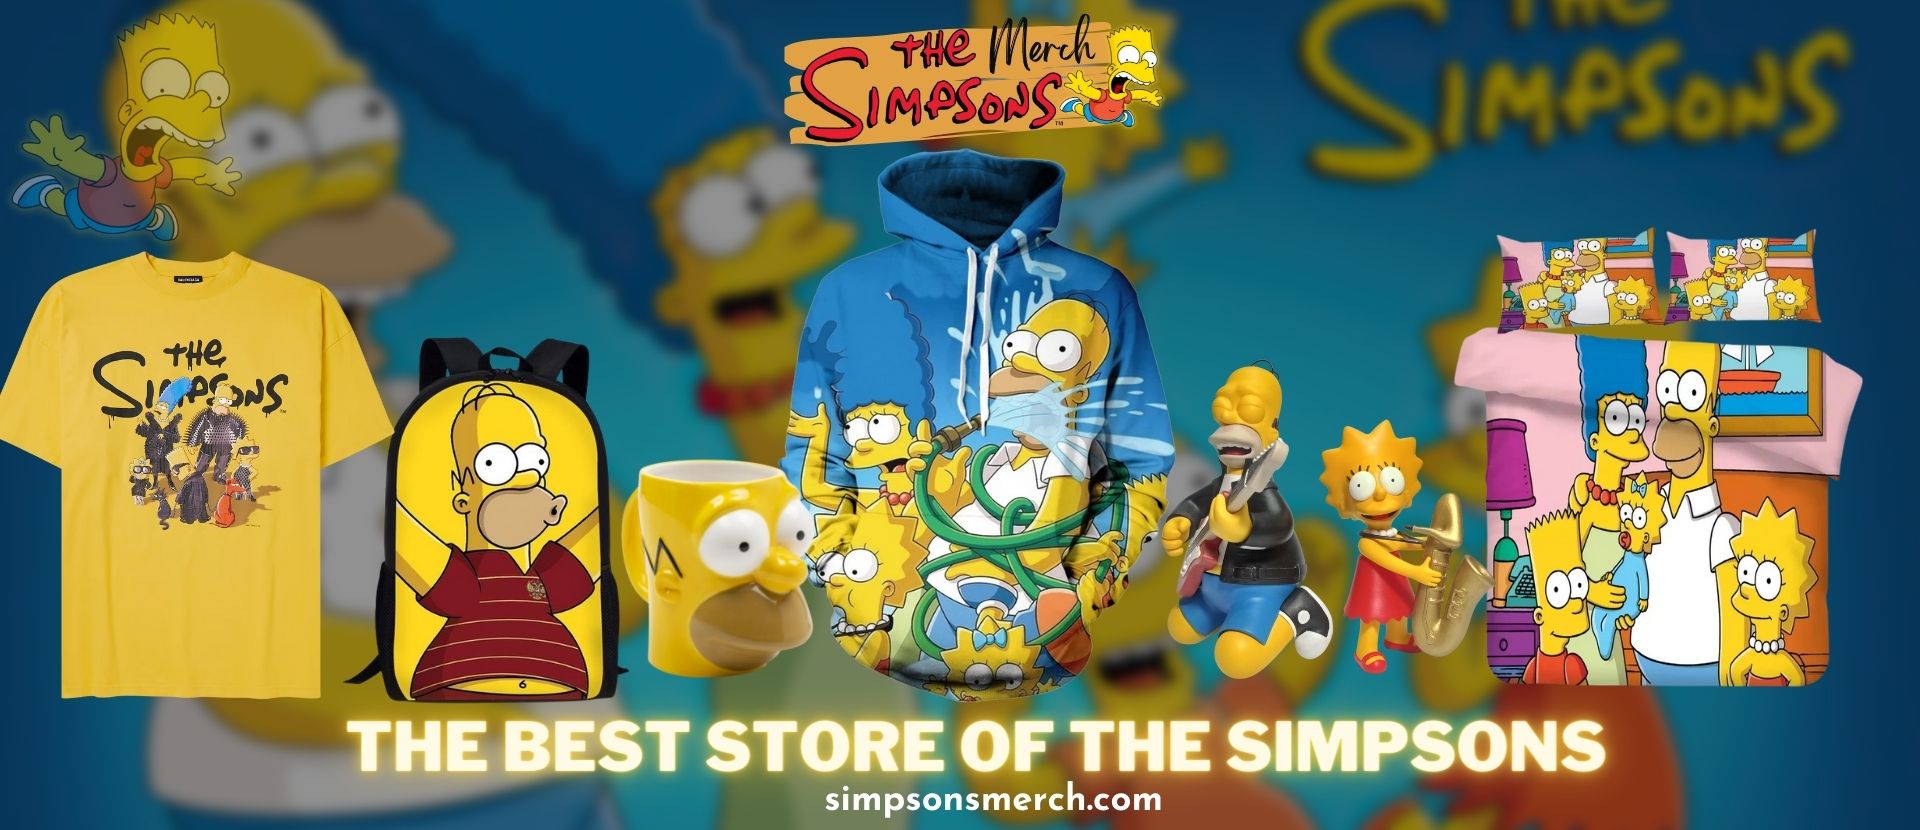 Simp Sons Store Banner 1 1 - The Simpsons Shop